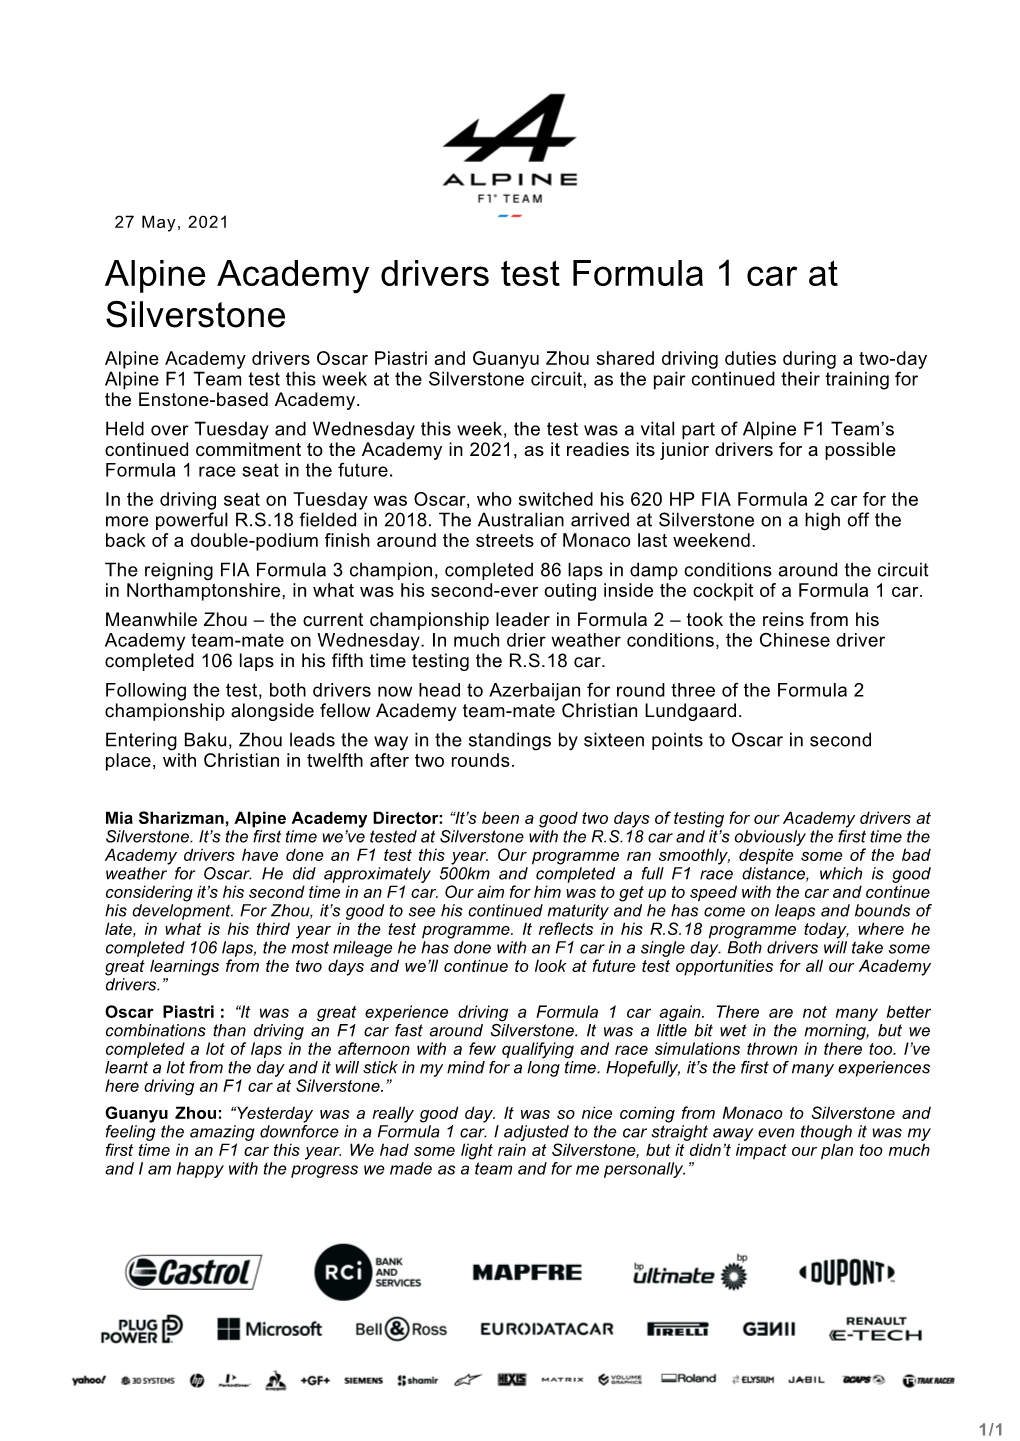 Alpine Academy Drivers Test Formula 1 Car at Silverstone